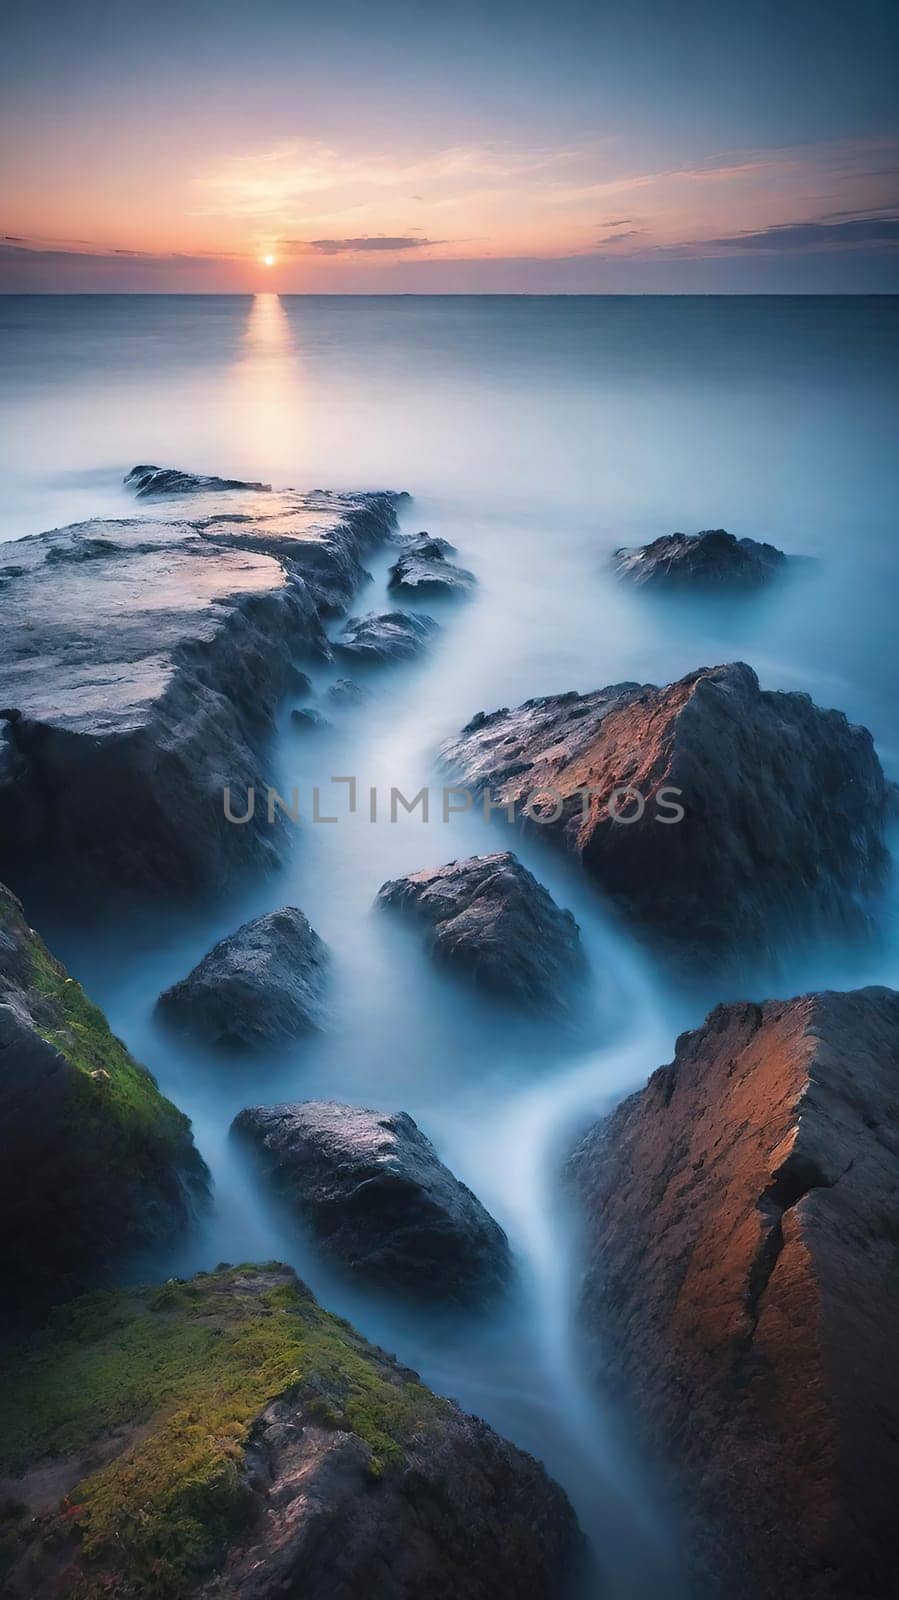 Long exposure image of a long exposure of the sea and rocks at sunset by yilmazsavaskandag